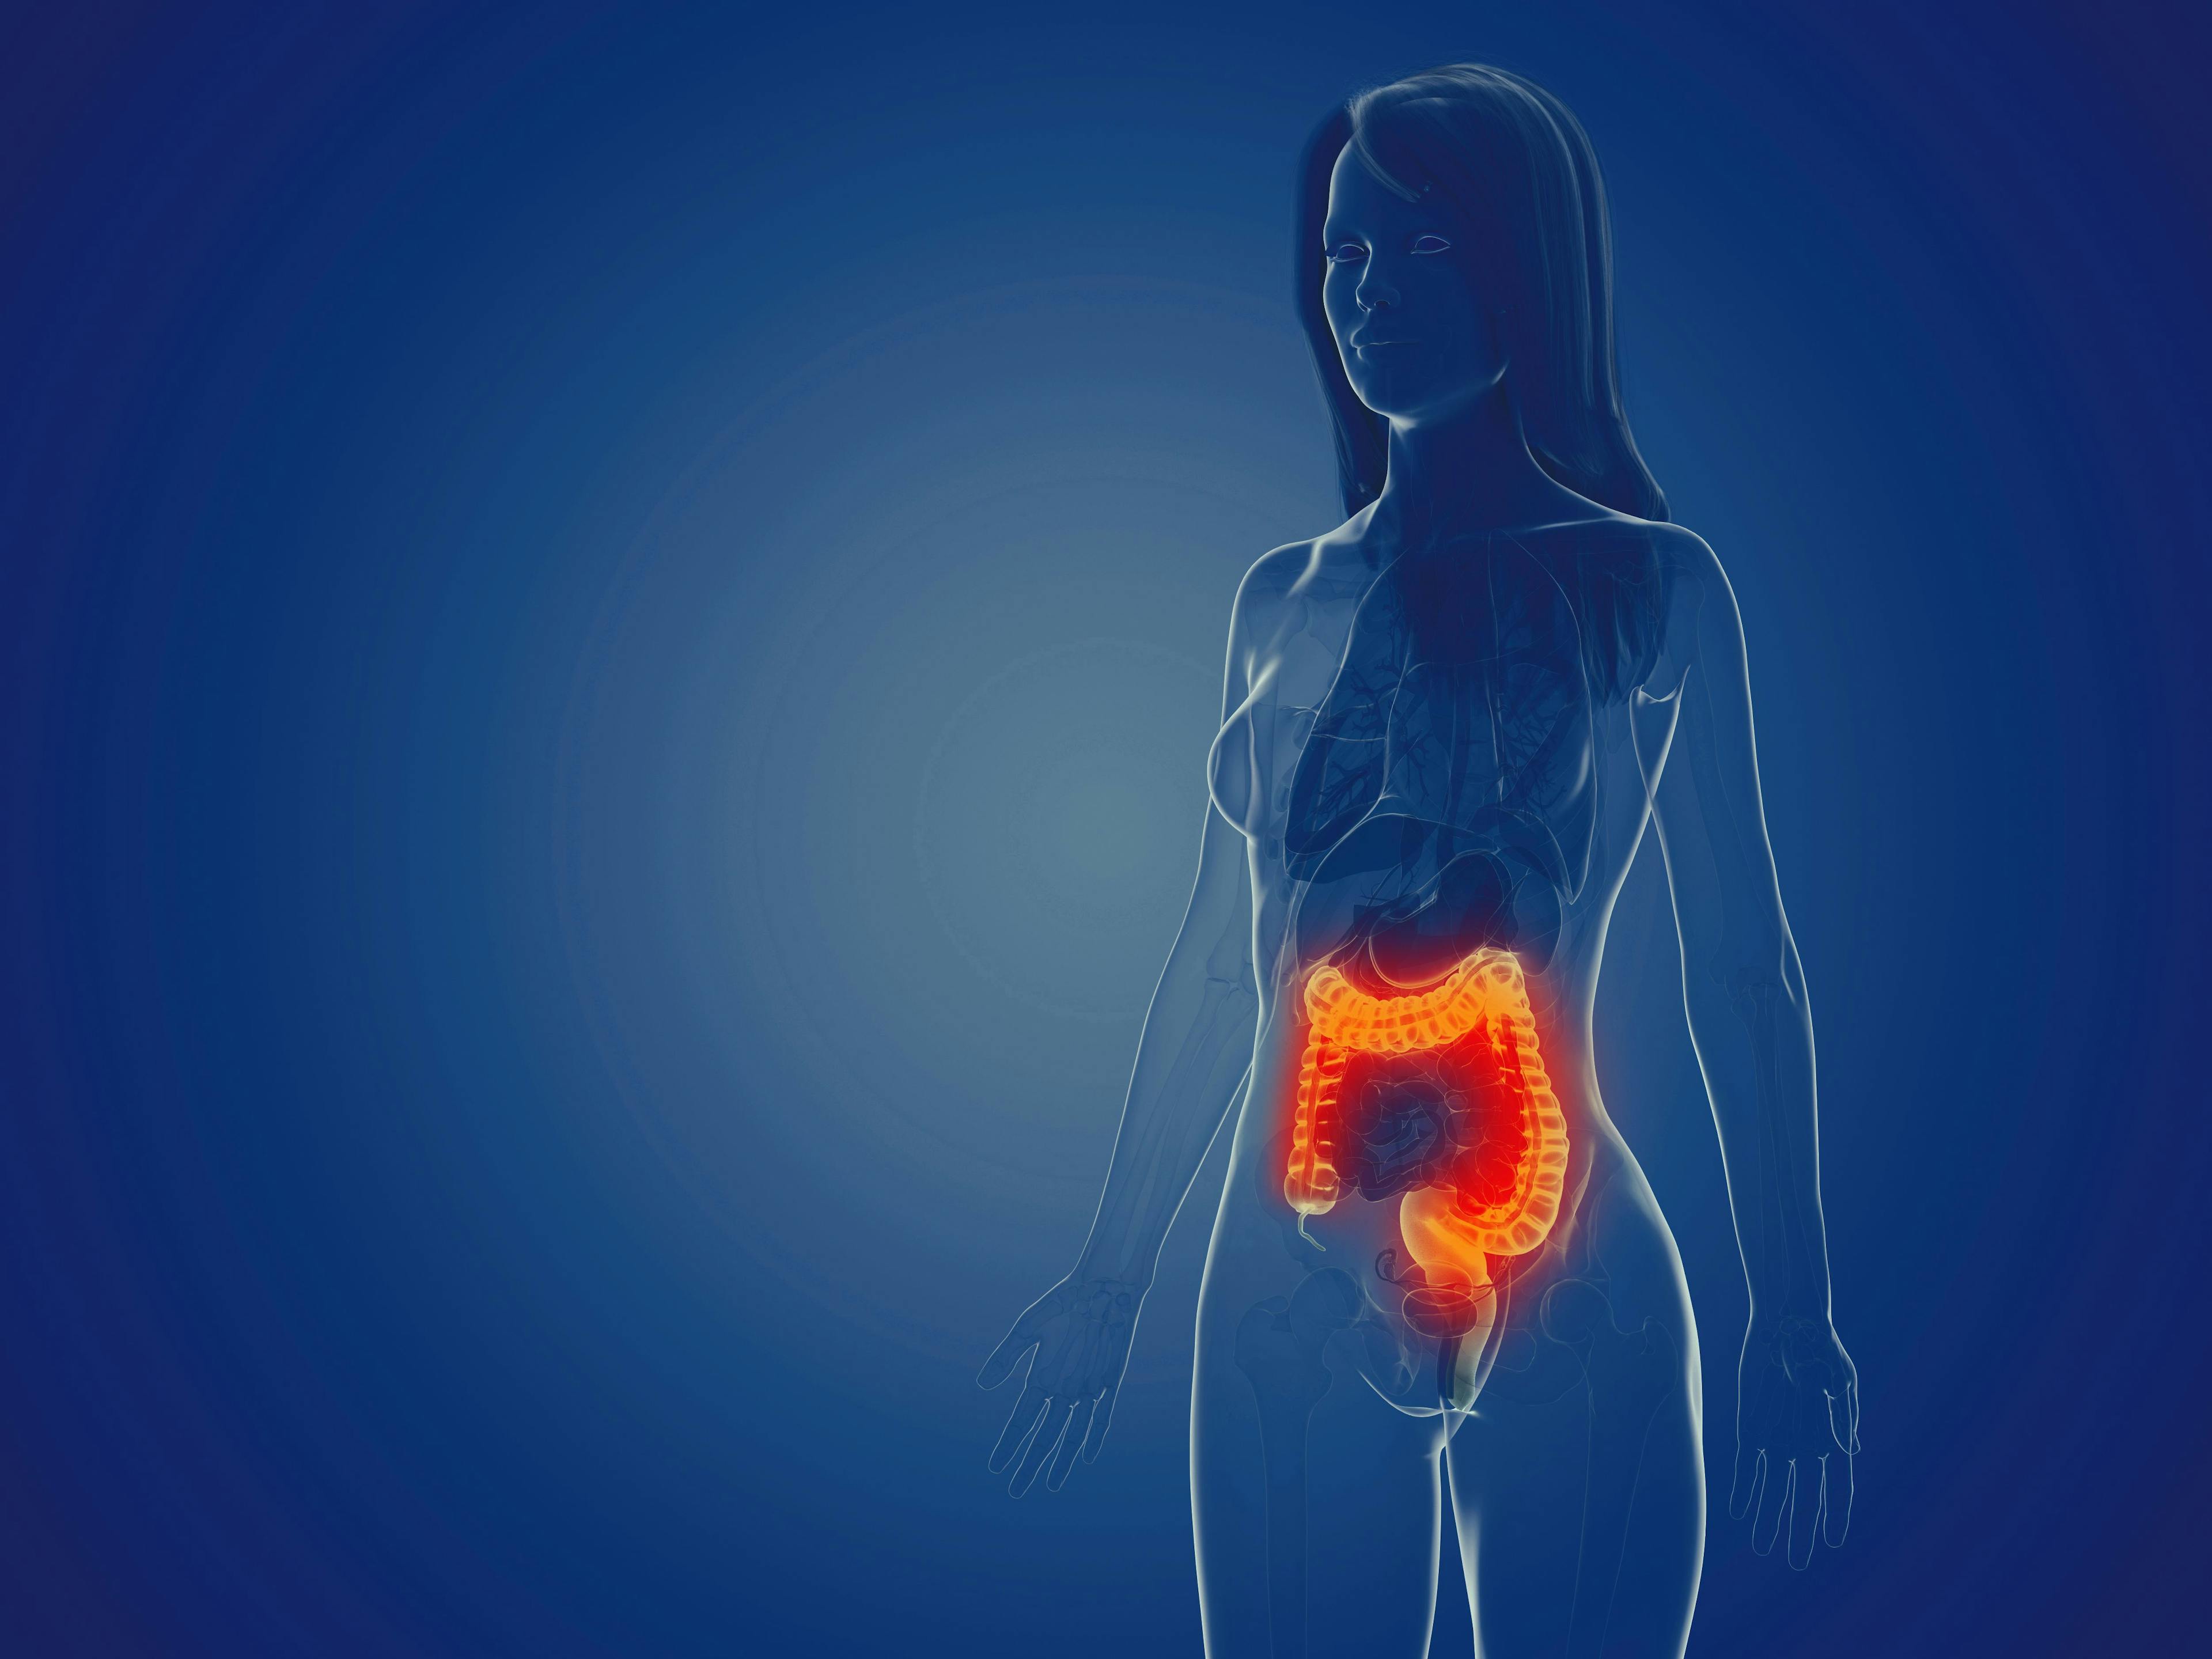 large intestine aglow in outline of female form | Image credit: ©Sebastian Kaulitzki  stock.adobe.com